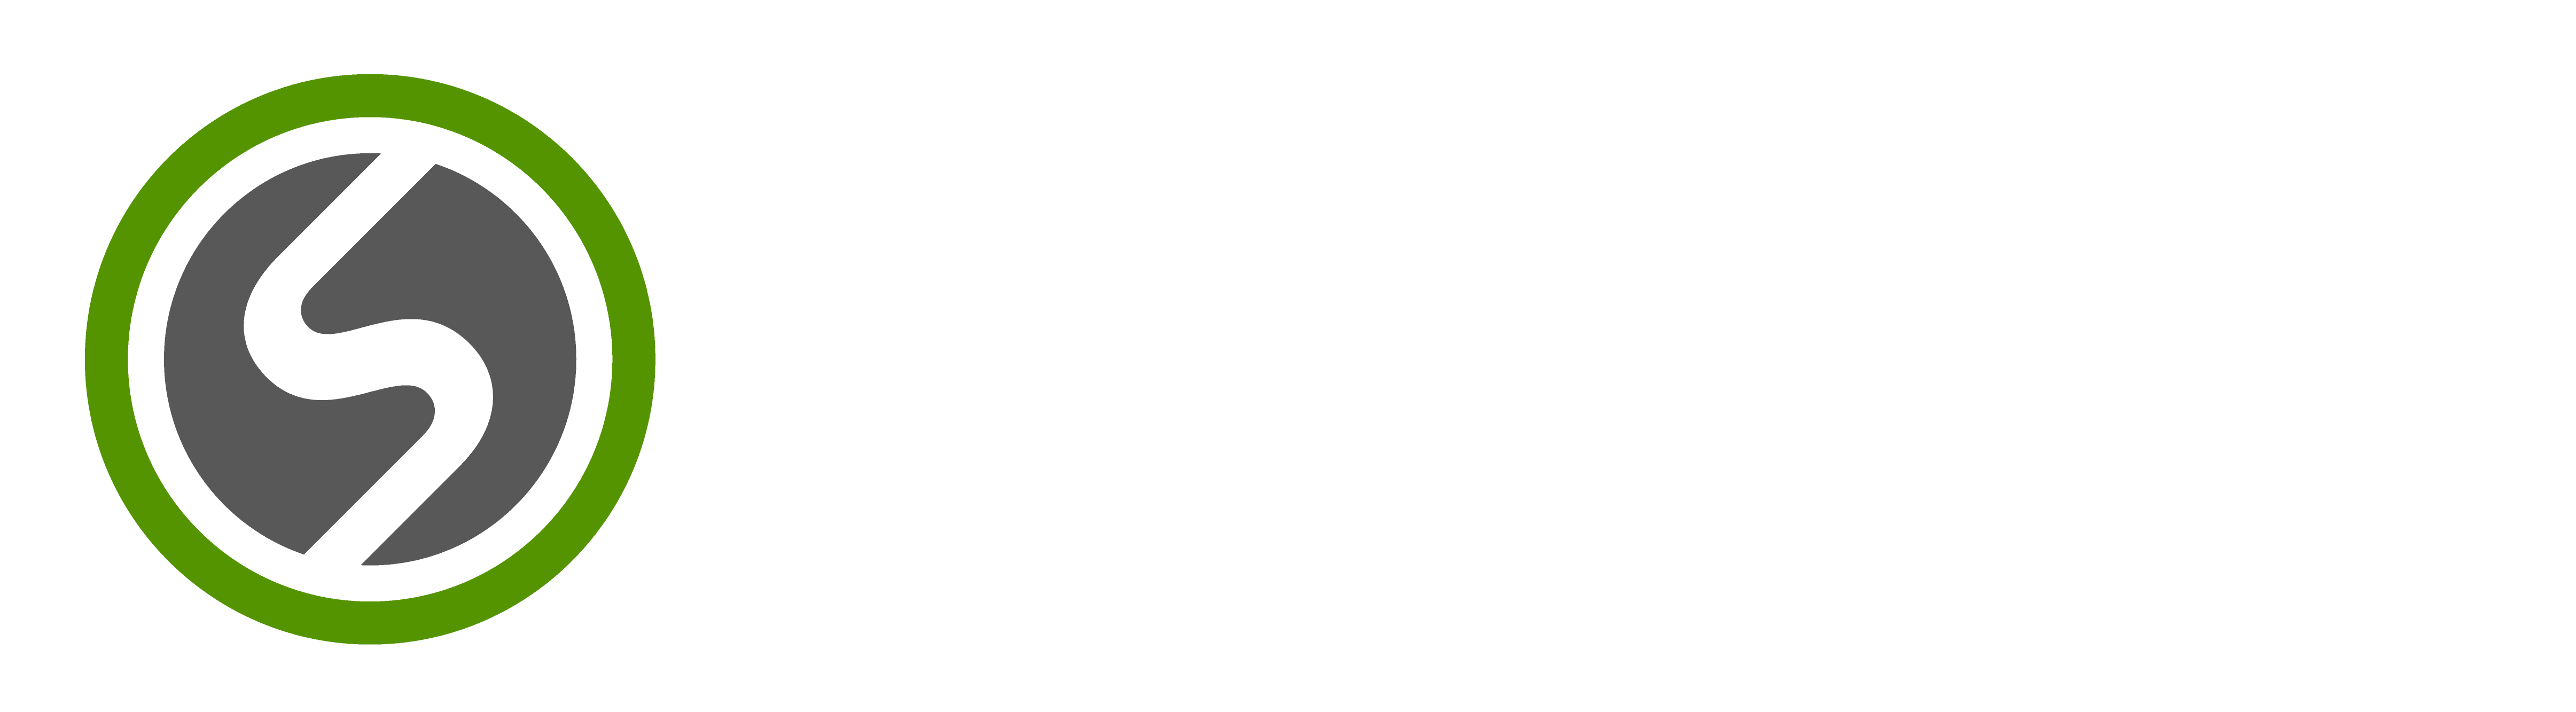 Sponsoo Logo White